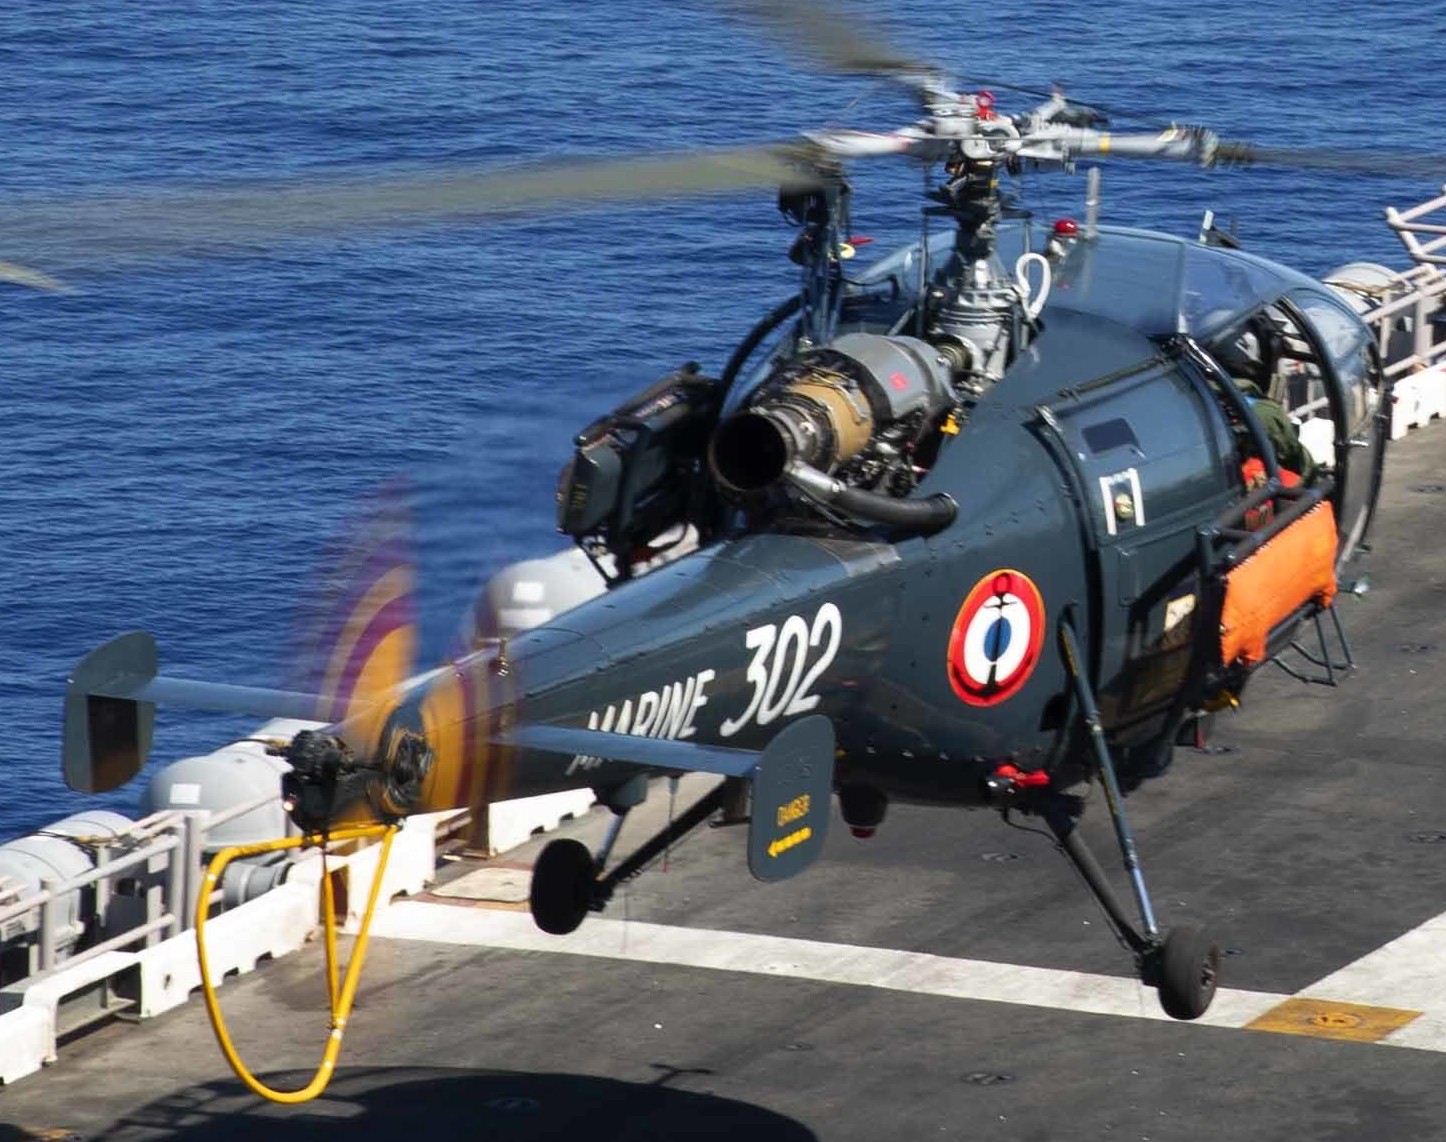 sa 316 319 alouette iii helicopter french navy marine nationale aeronavale flottille 302 26